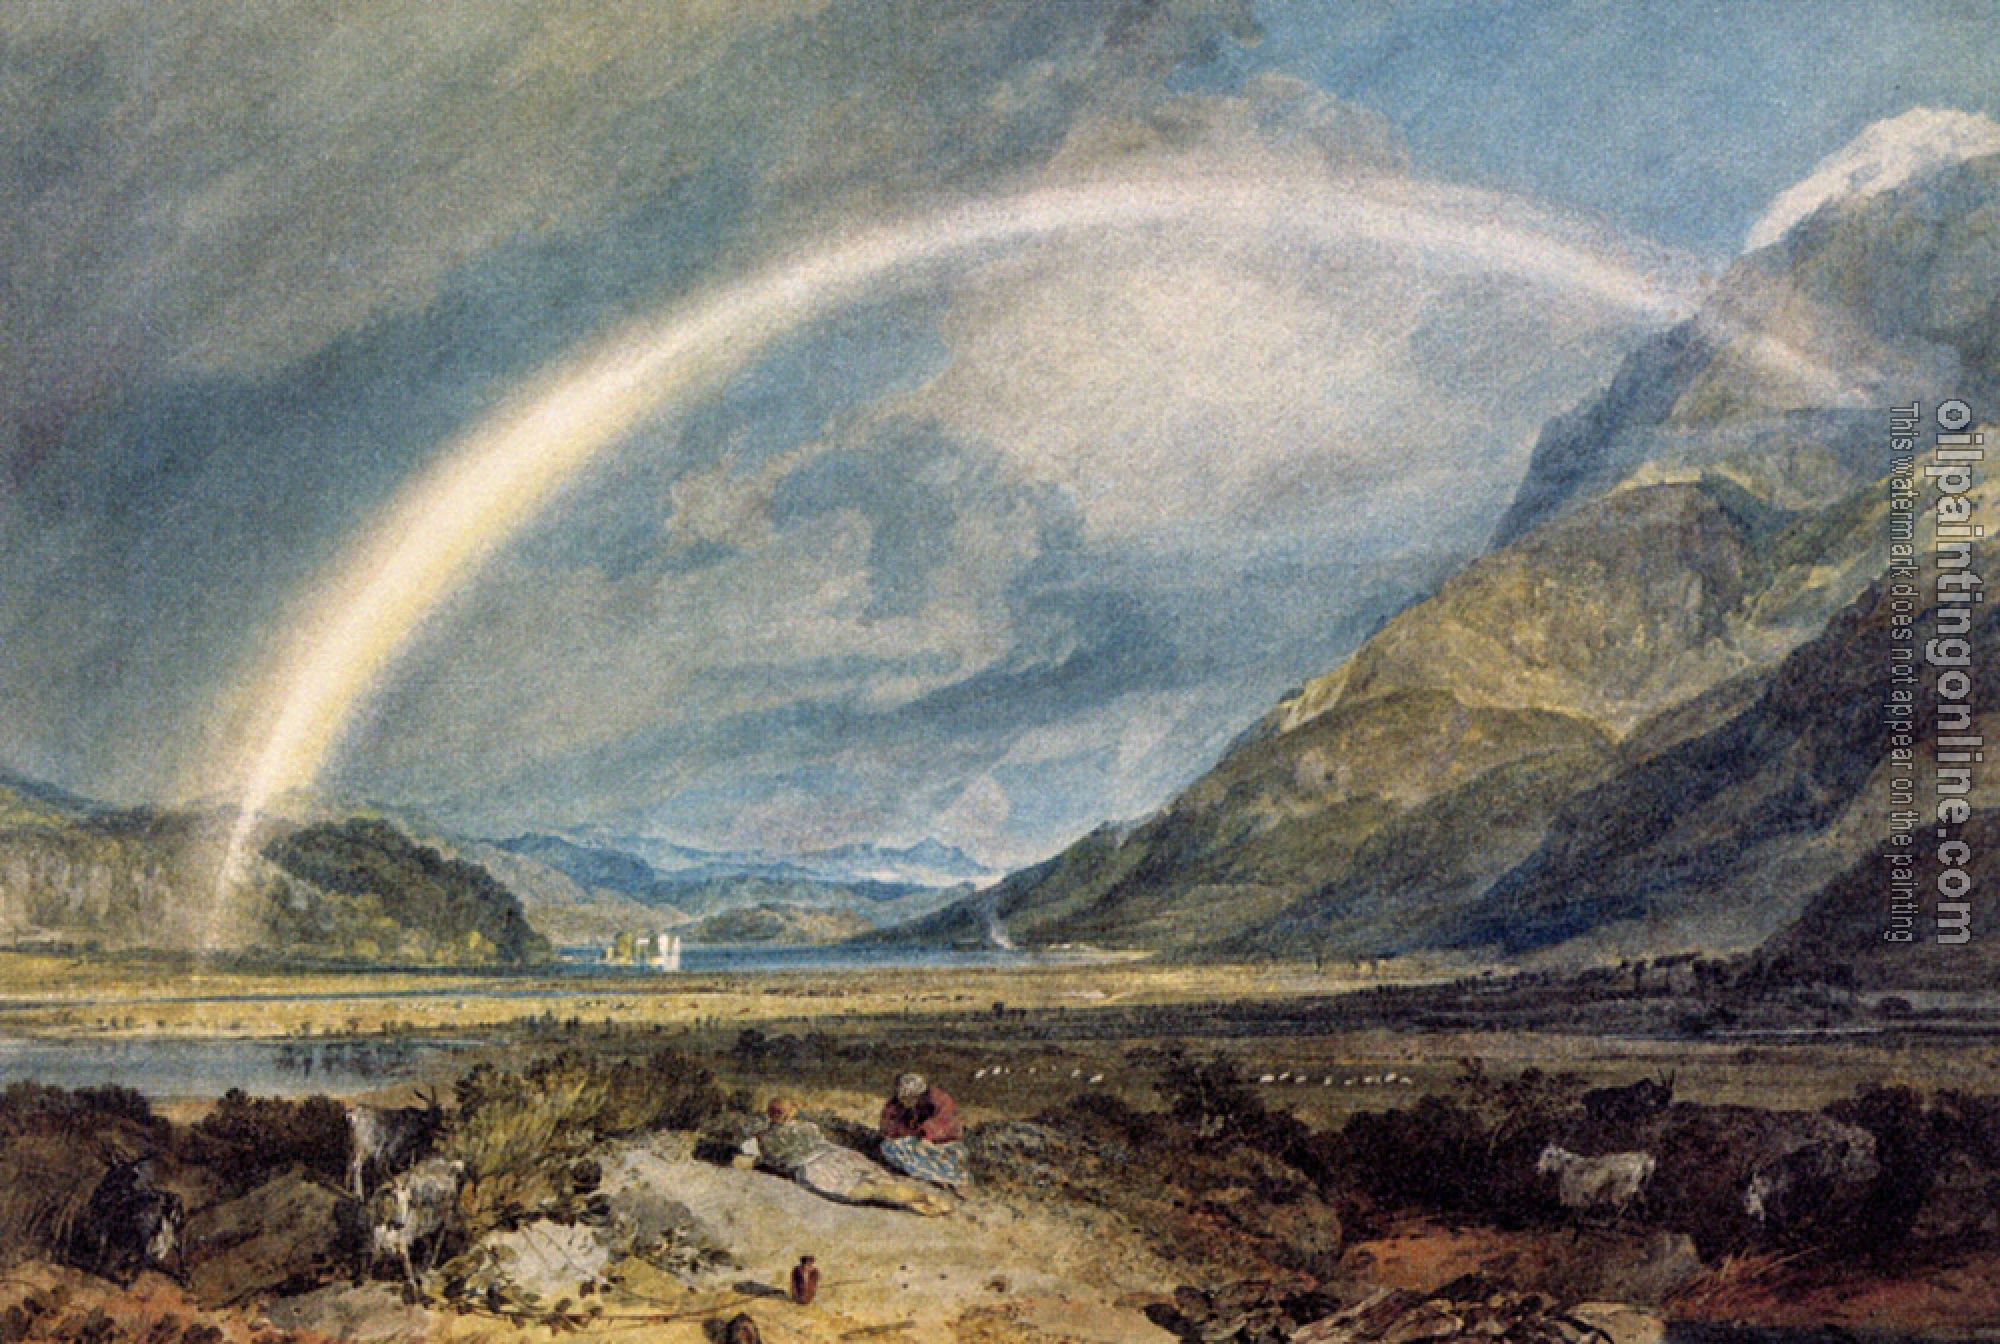 Turner, Joseph Mallord William - Kilchern Castle, with the Cruchan Ben Mountains, Scotland Noon